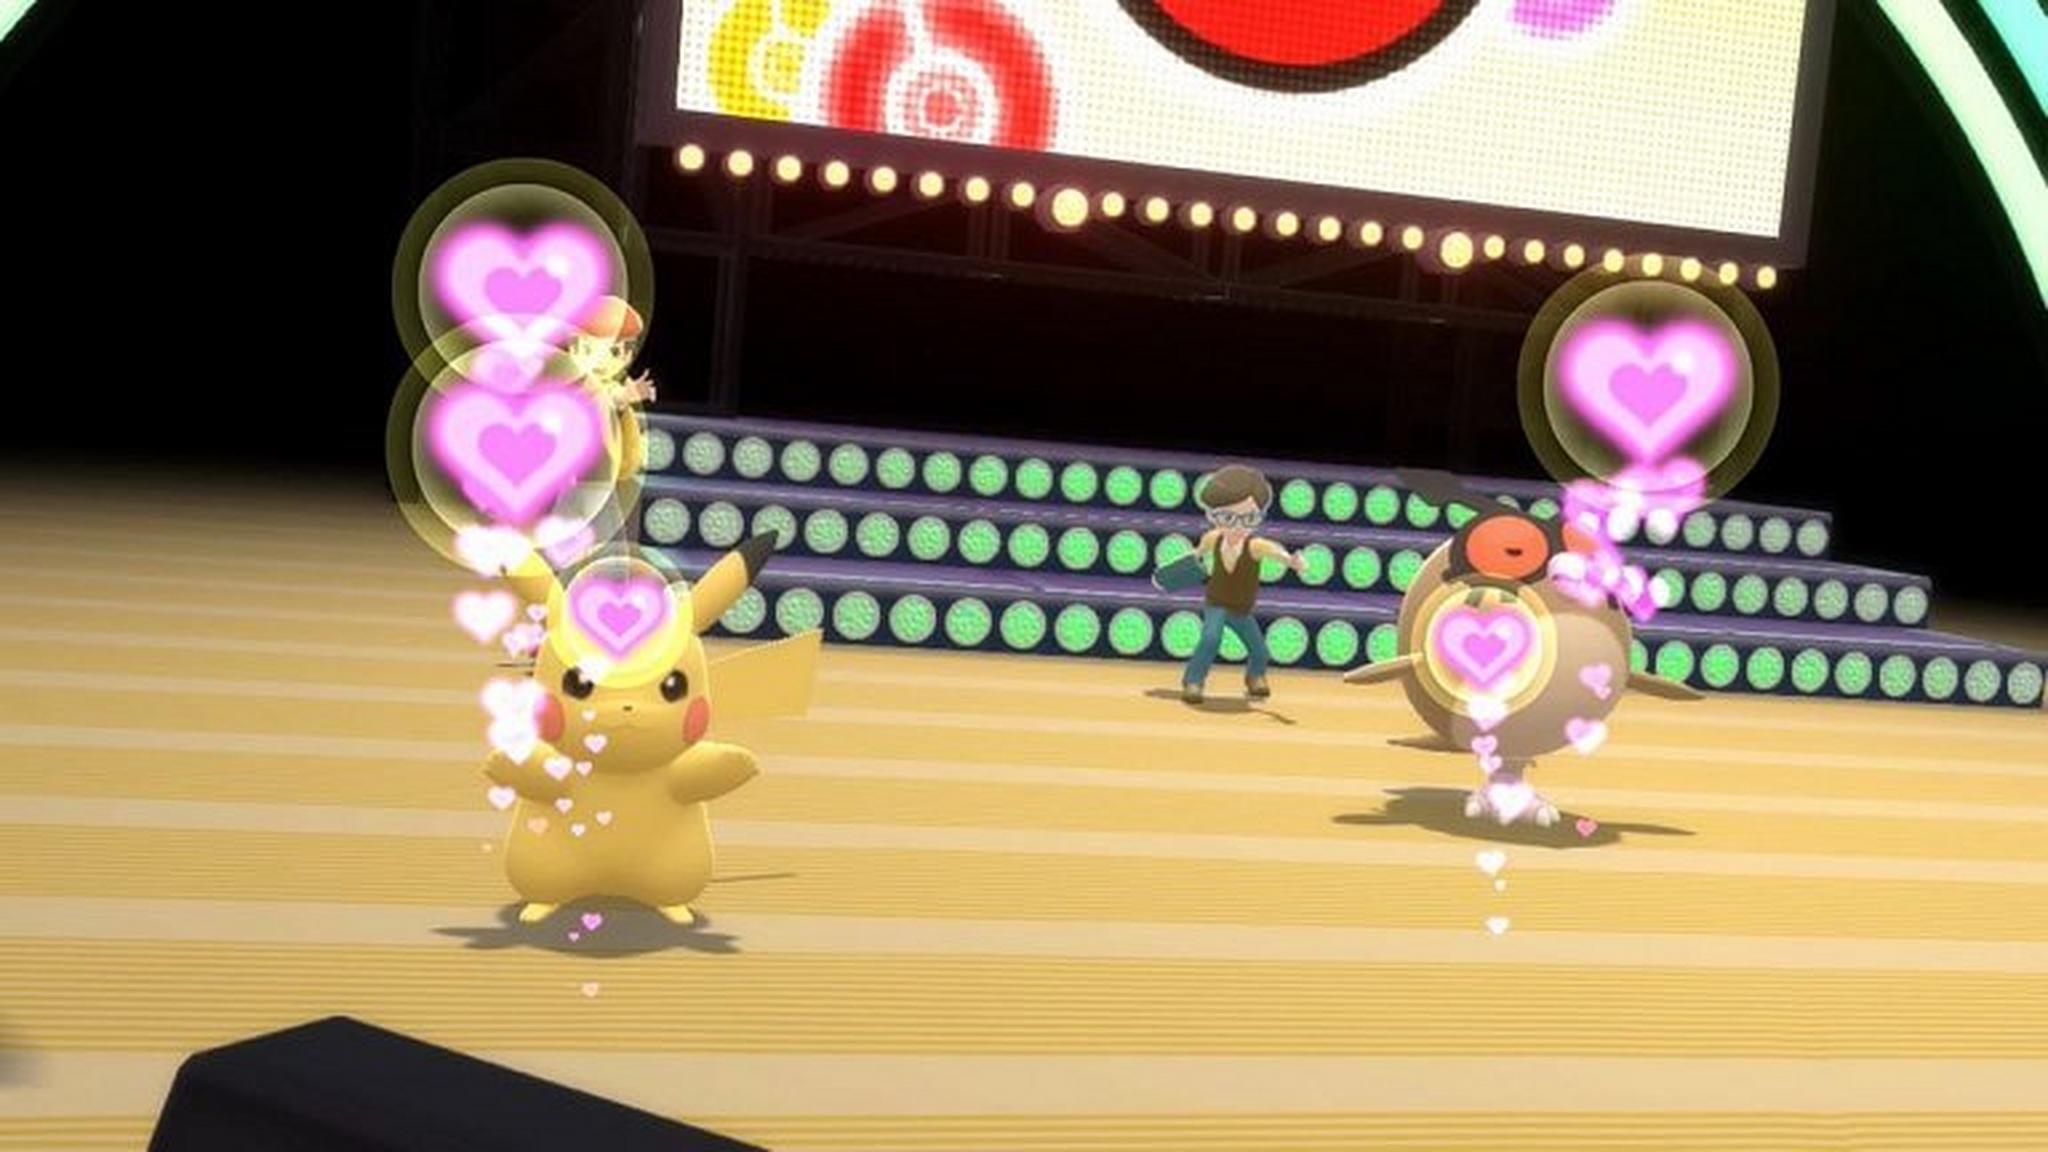 Pokemon Shining Pearl - Nintendo Switch Game